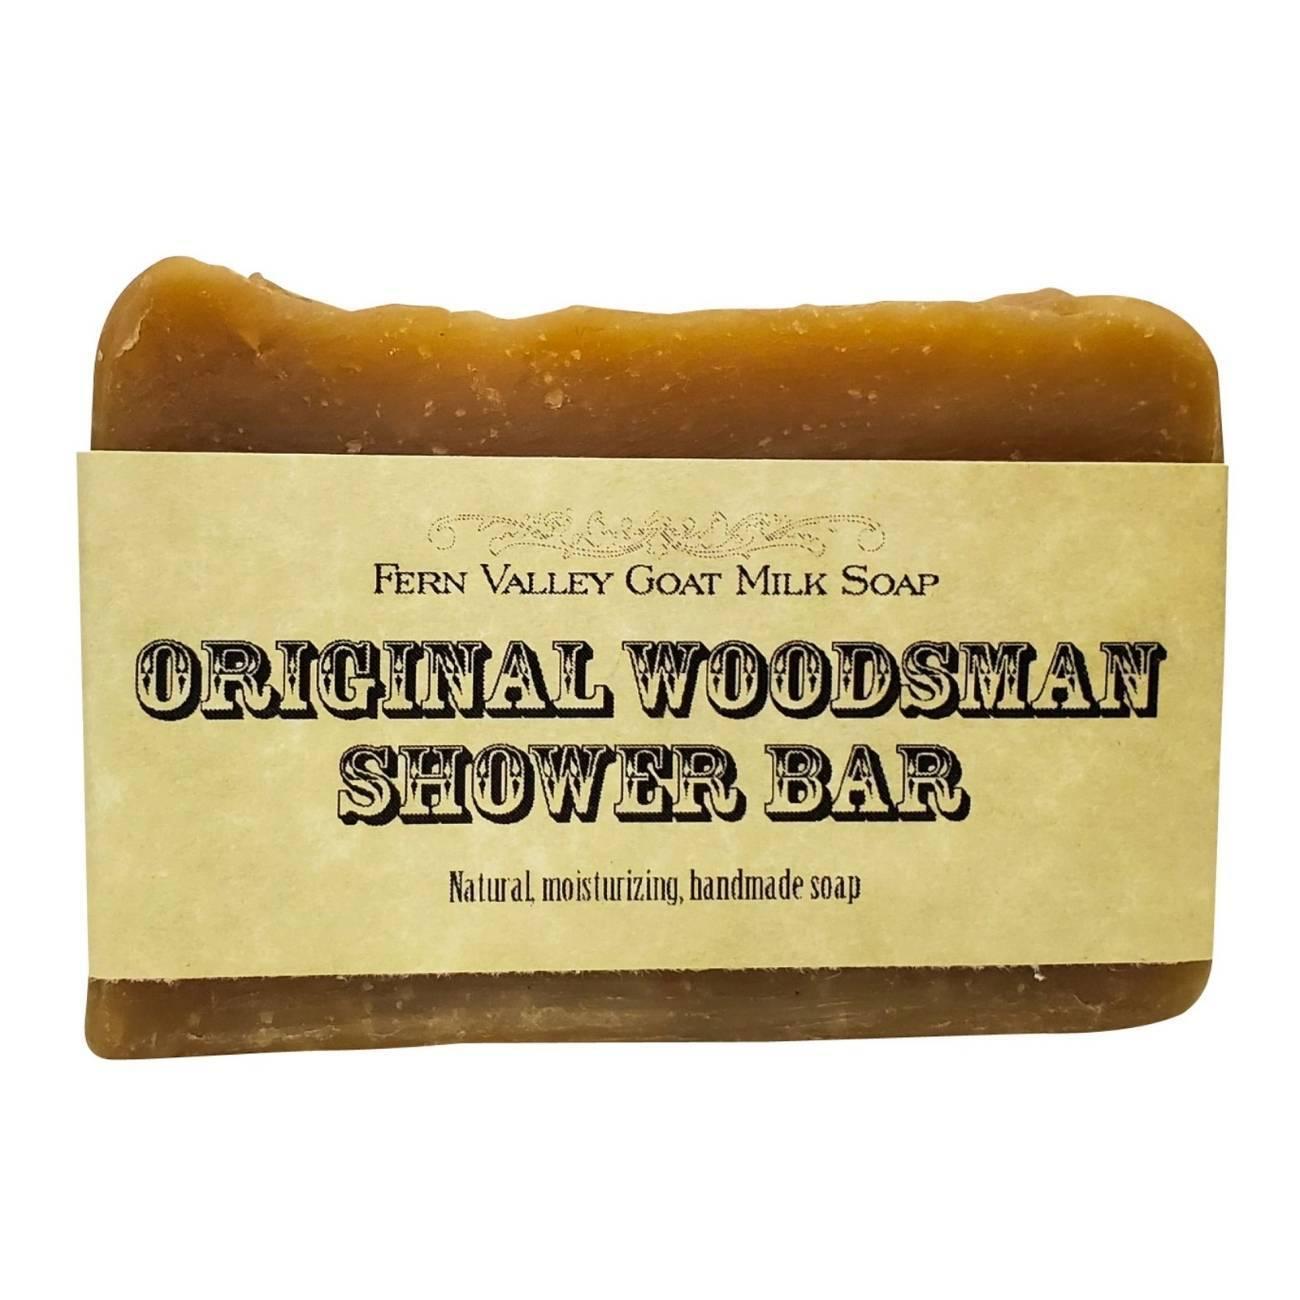 Fern Valley Shower Soap Original Woodsman